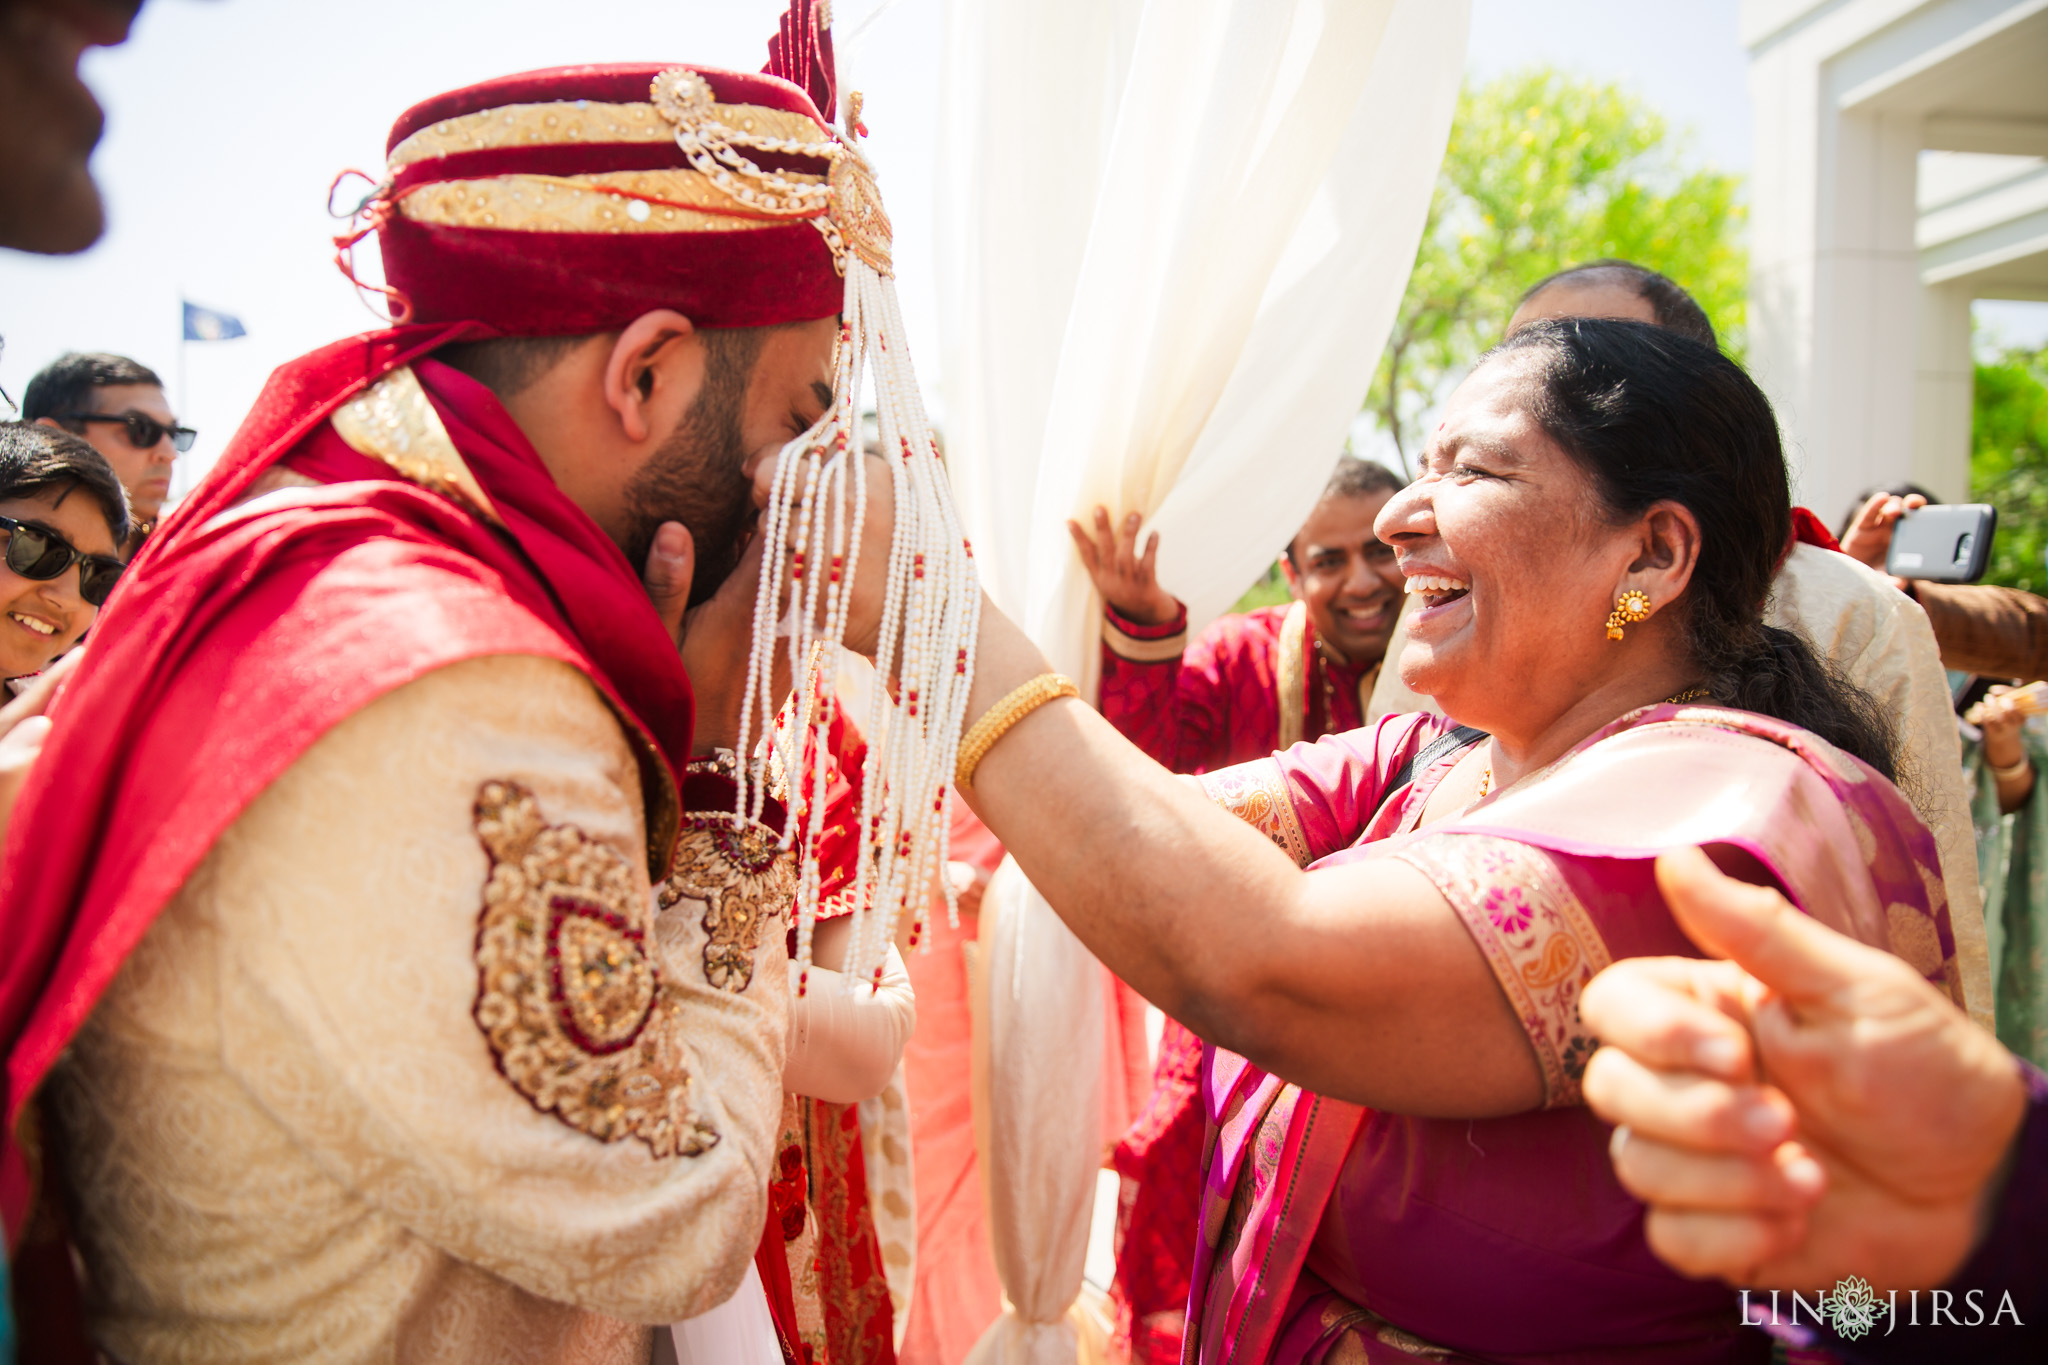 025 richard nixon library yorba linda indian wedding ceremony photography